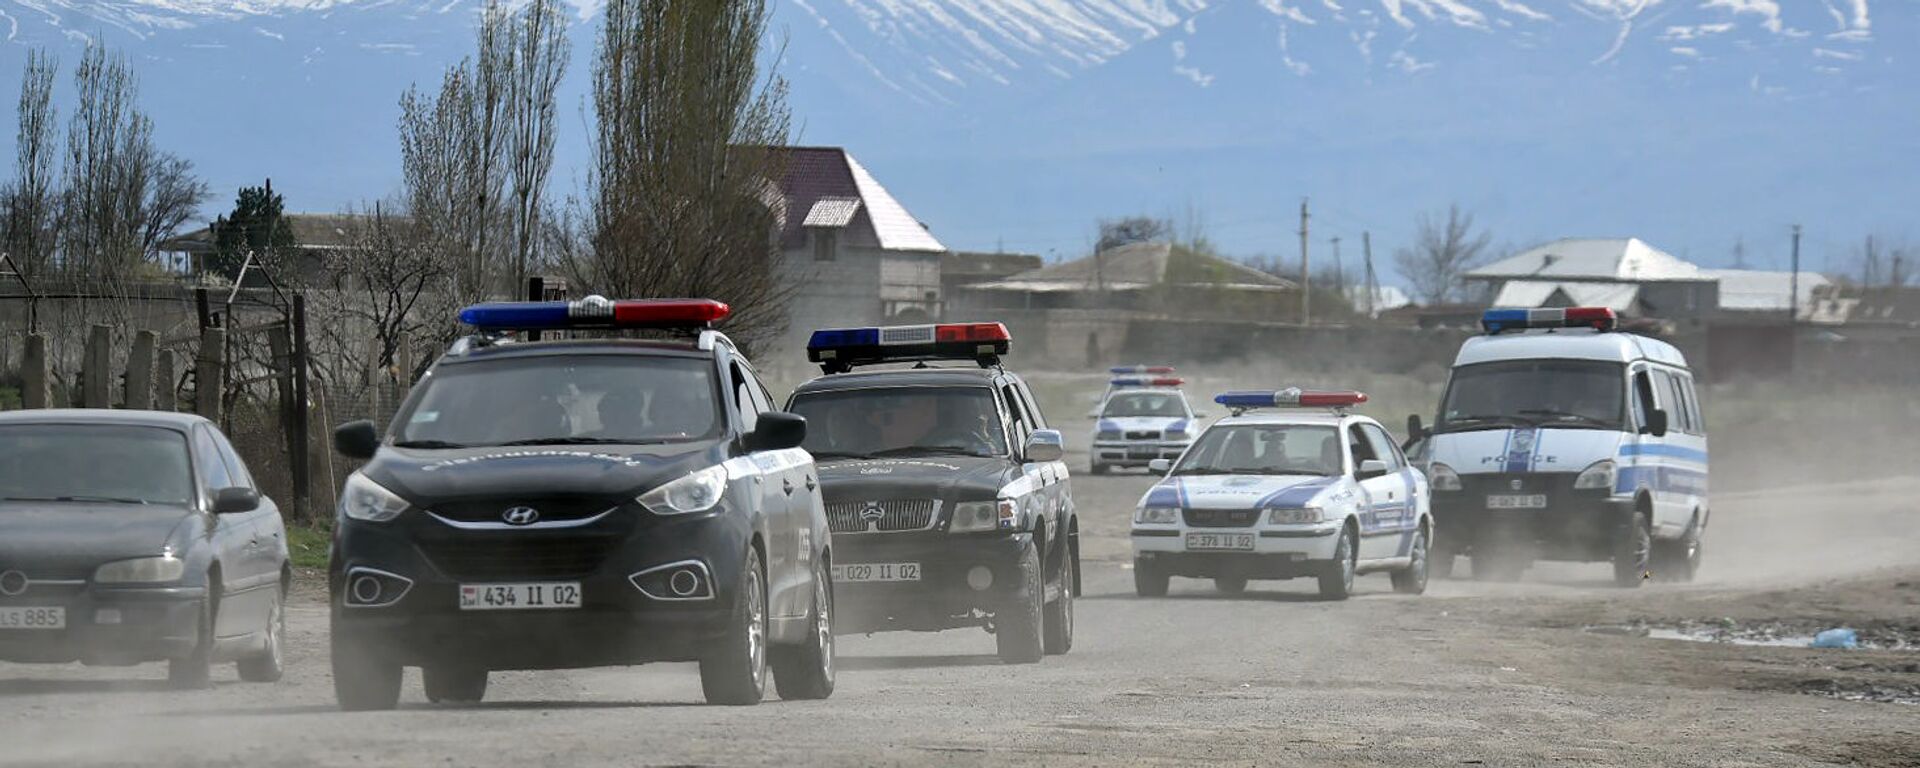 Сотрудники полиции в селе Зартонк (13 апреля 2019). Армавир - Sputnik Армения, 1920, 22.04.2021